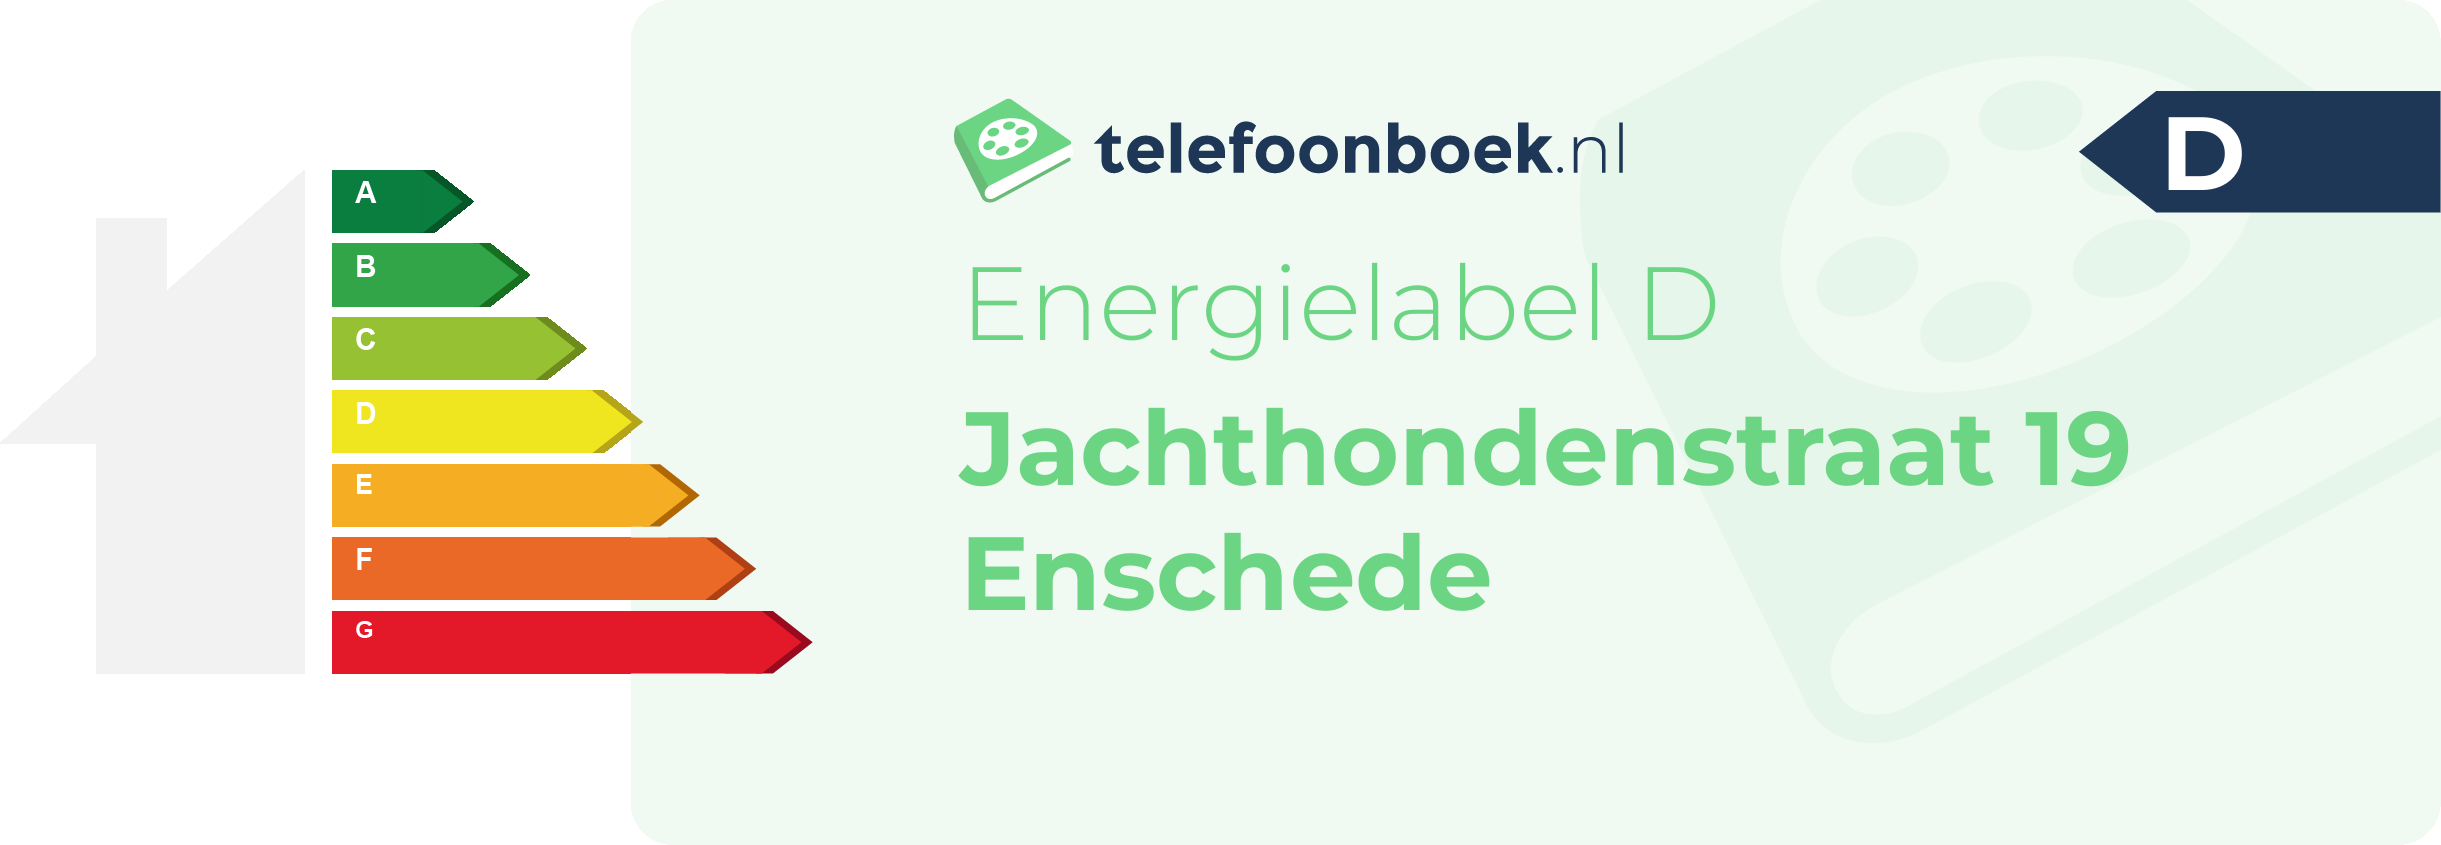 Energielabel Jachthondenstraat 19 Enschede